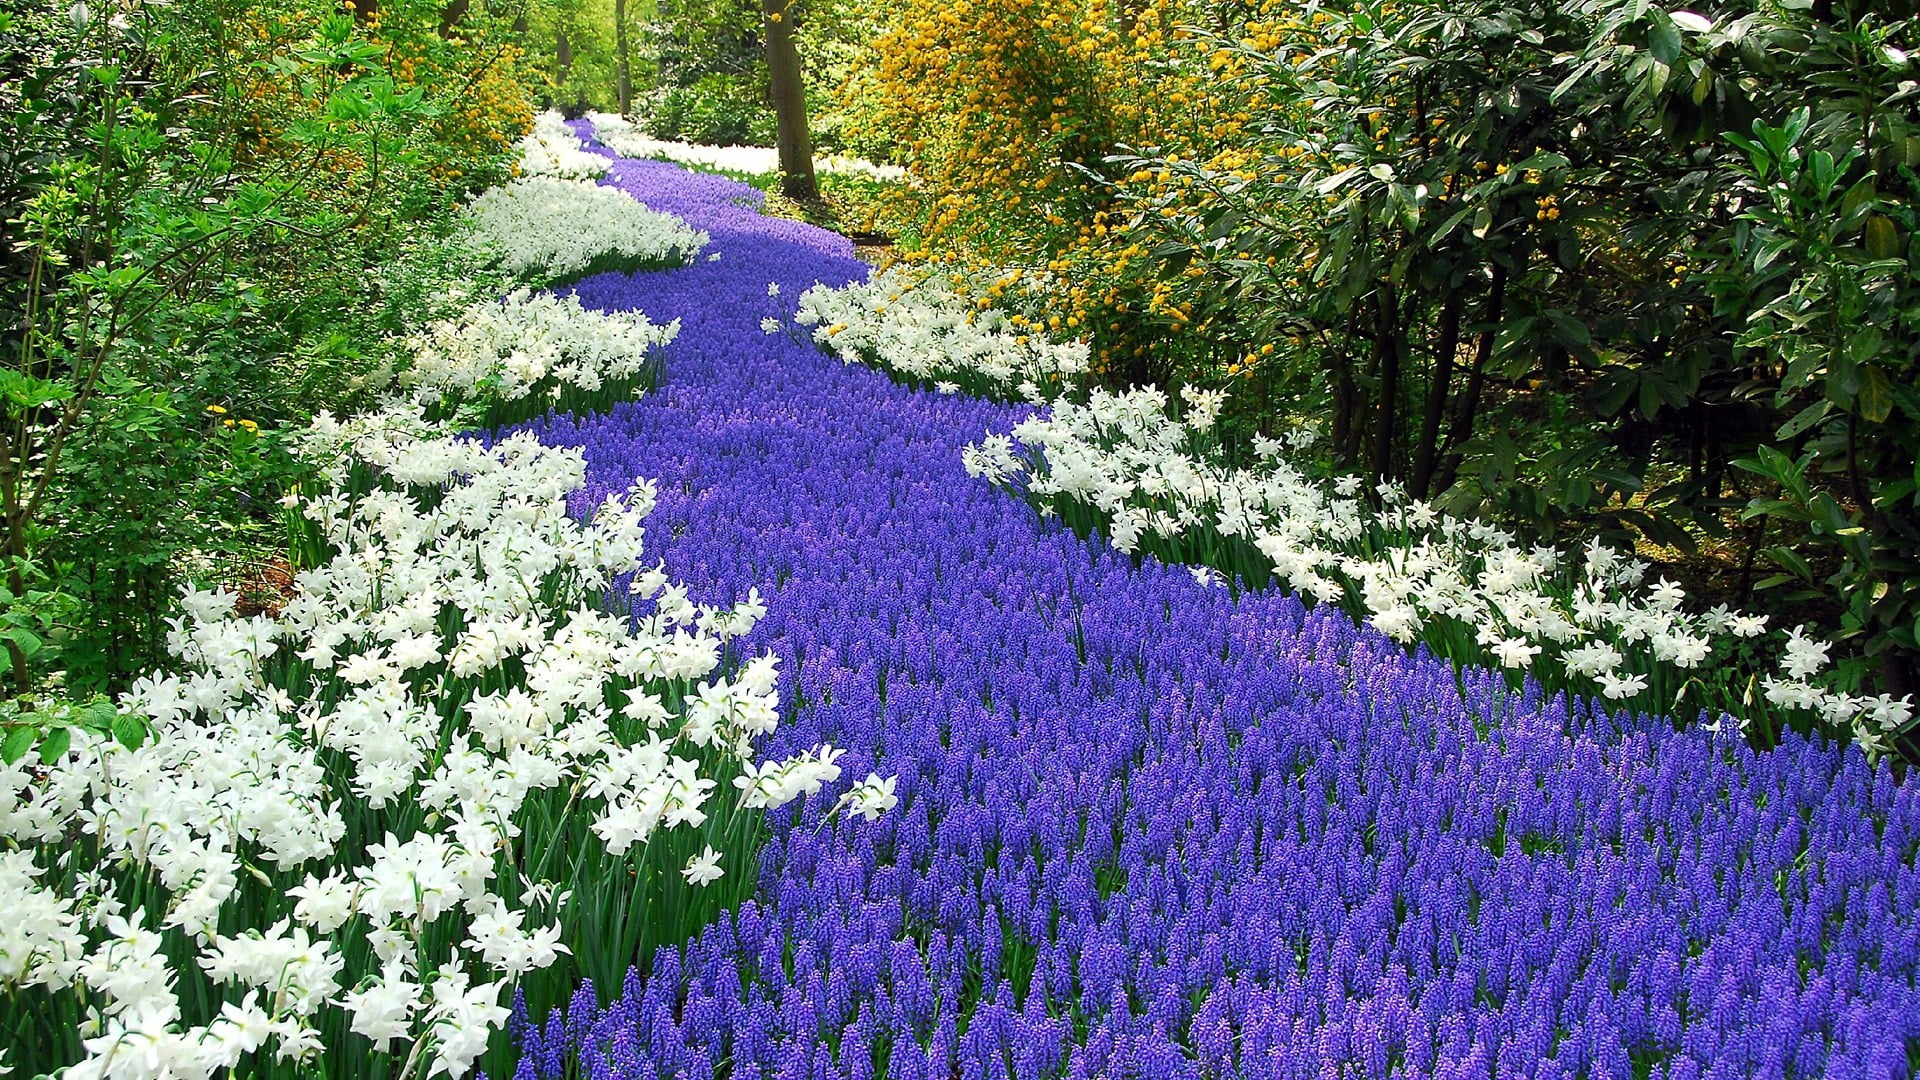 white and purple flowering field, daffodils, muscari, road, shrubs